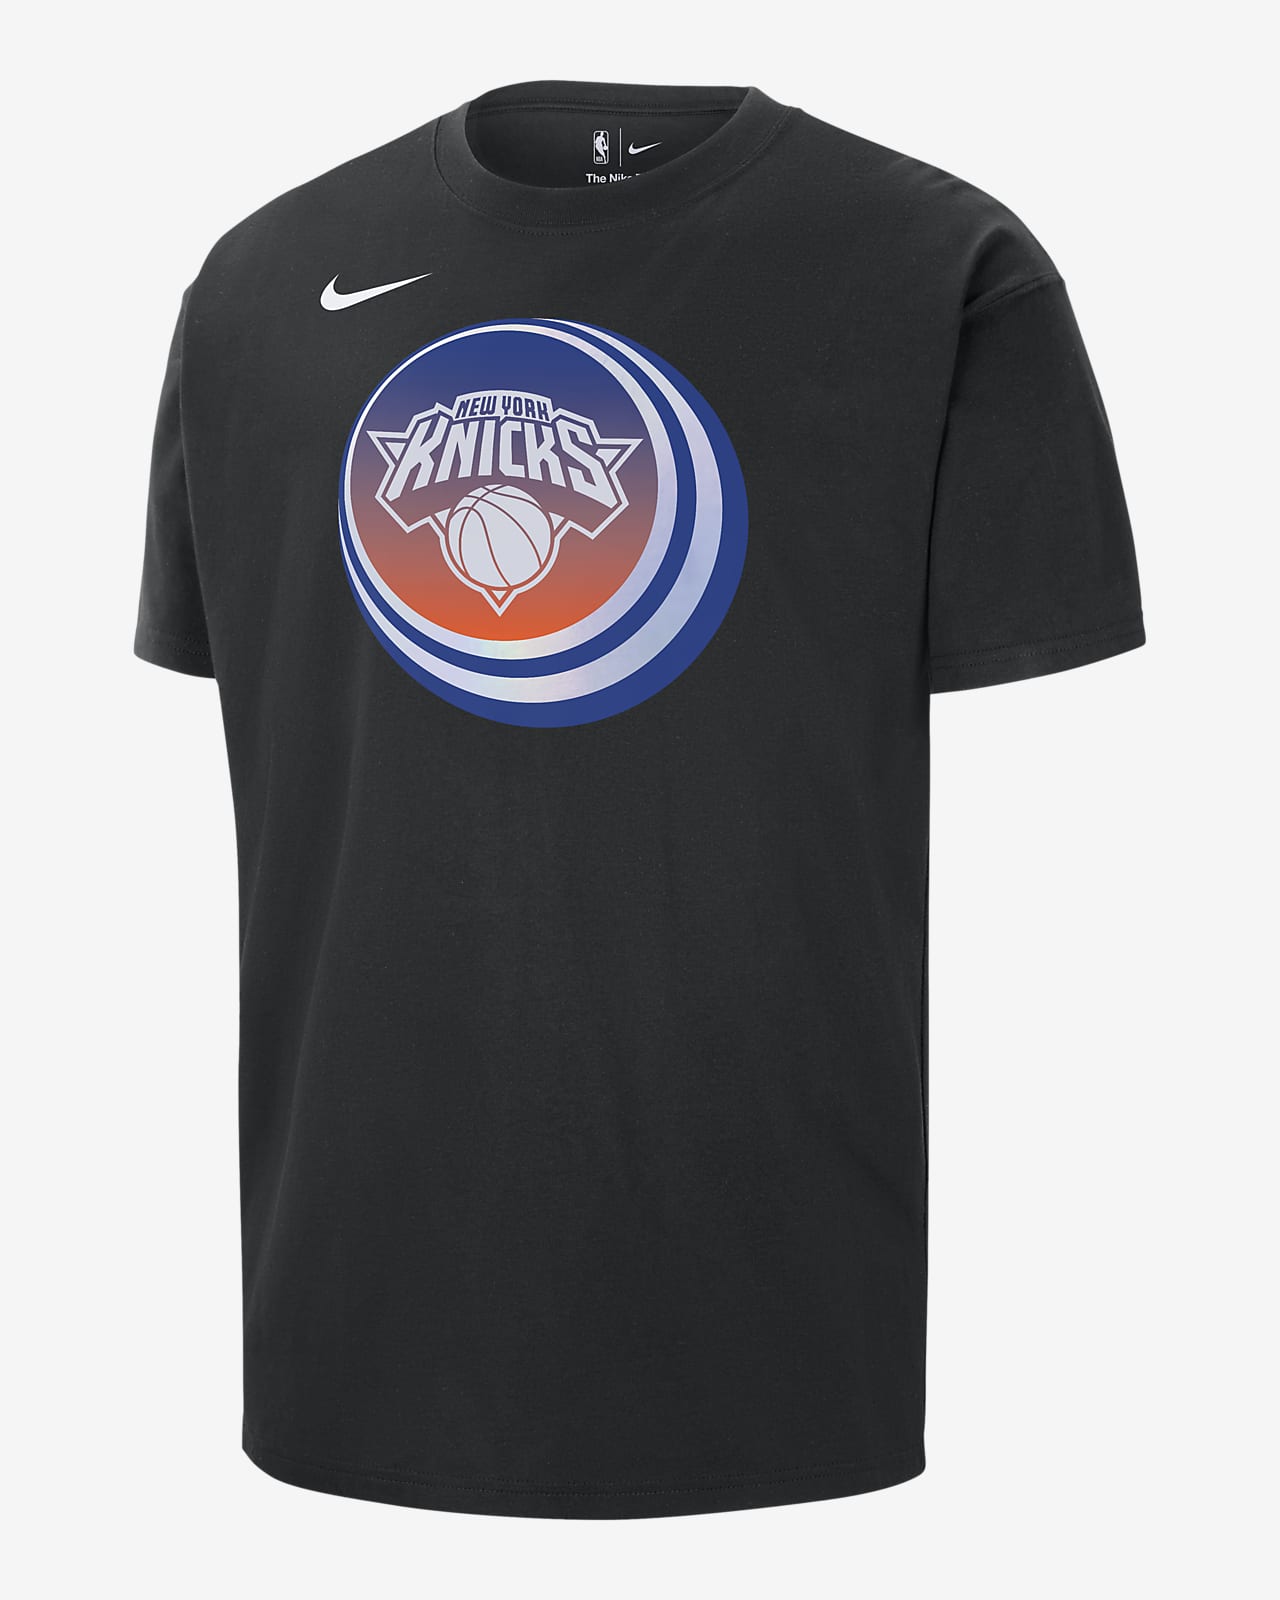 Playera Nike de la NBA para hombre New York Knicks Essential